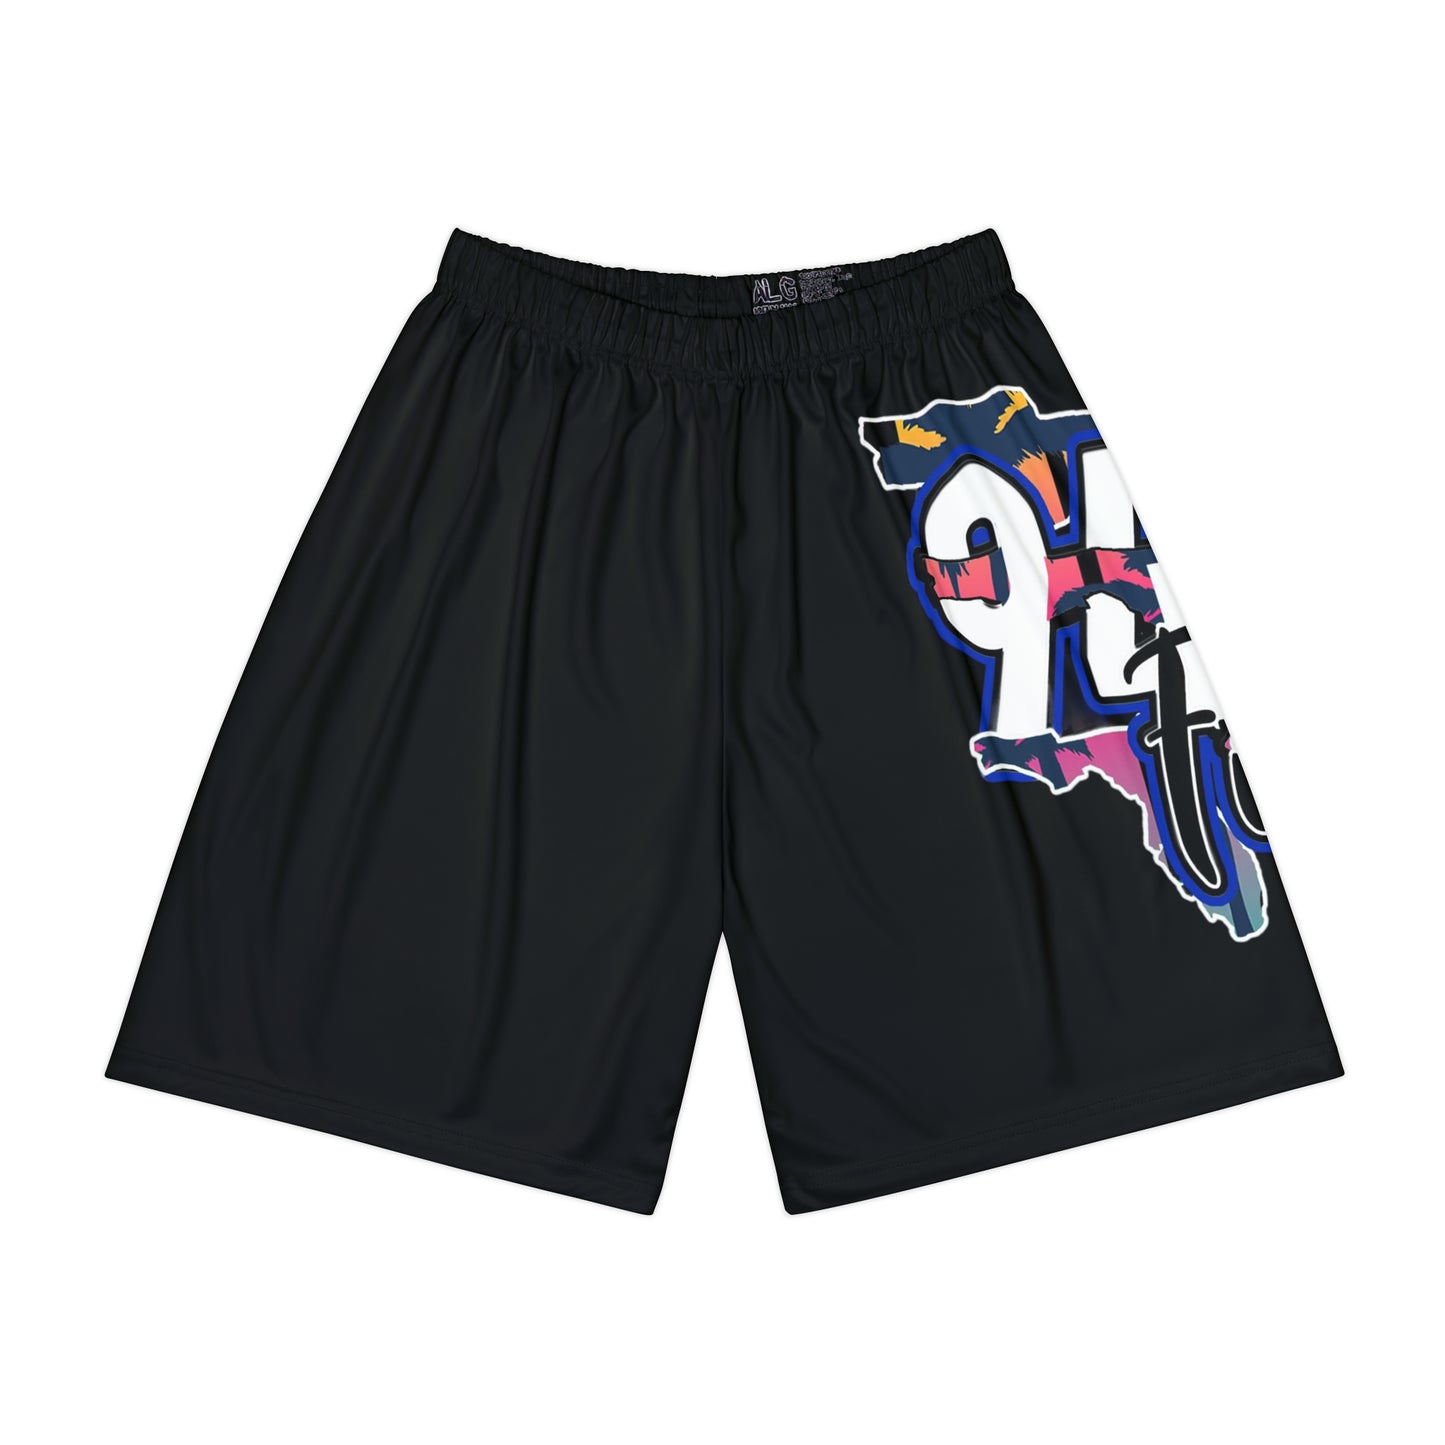 941s Finest sport shorts